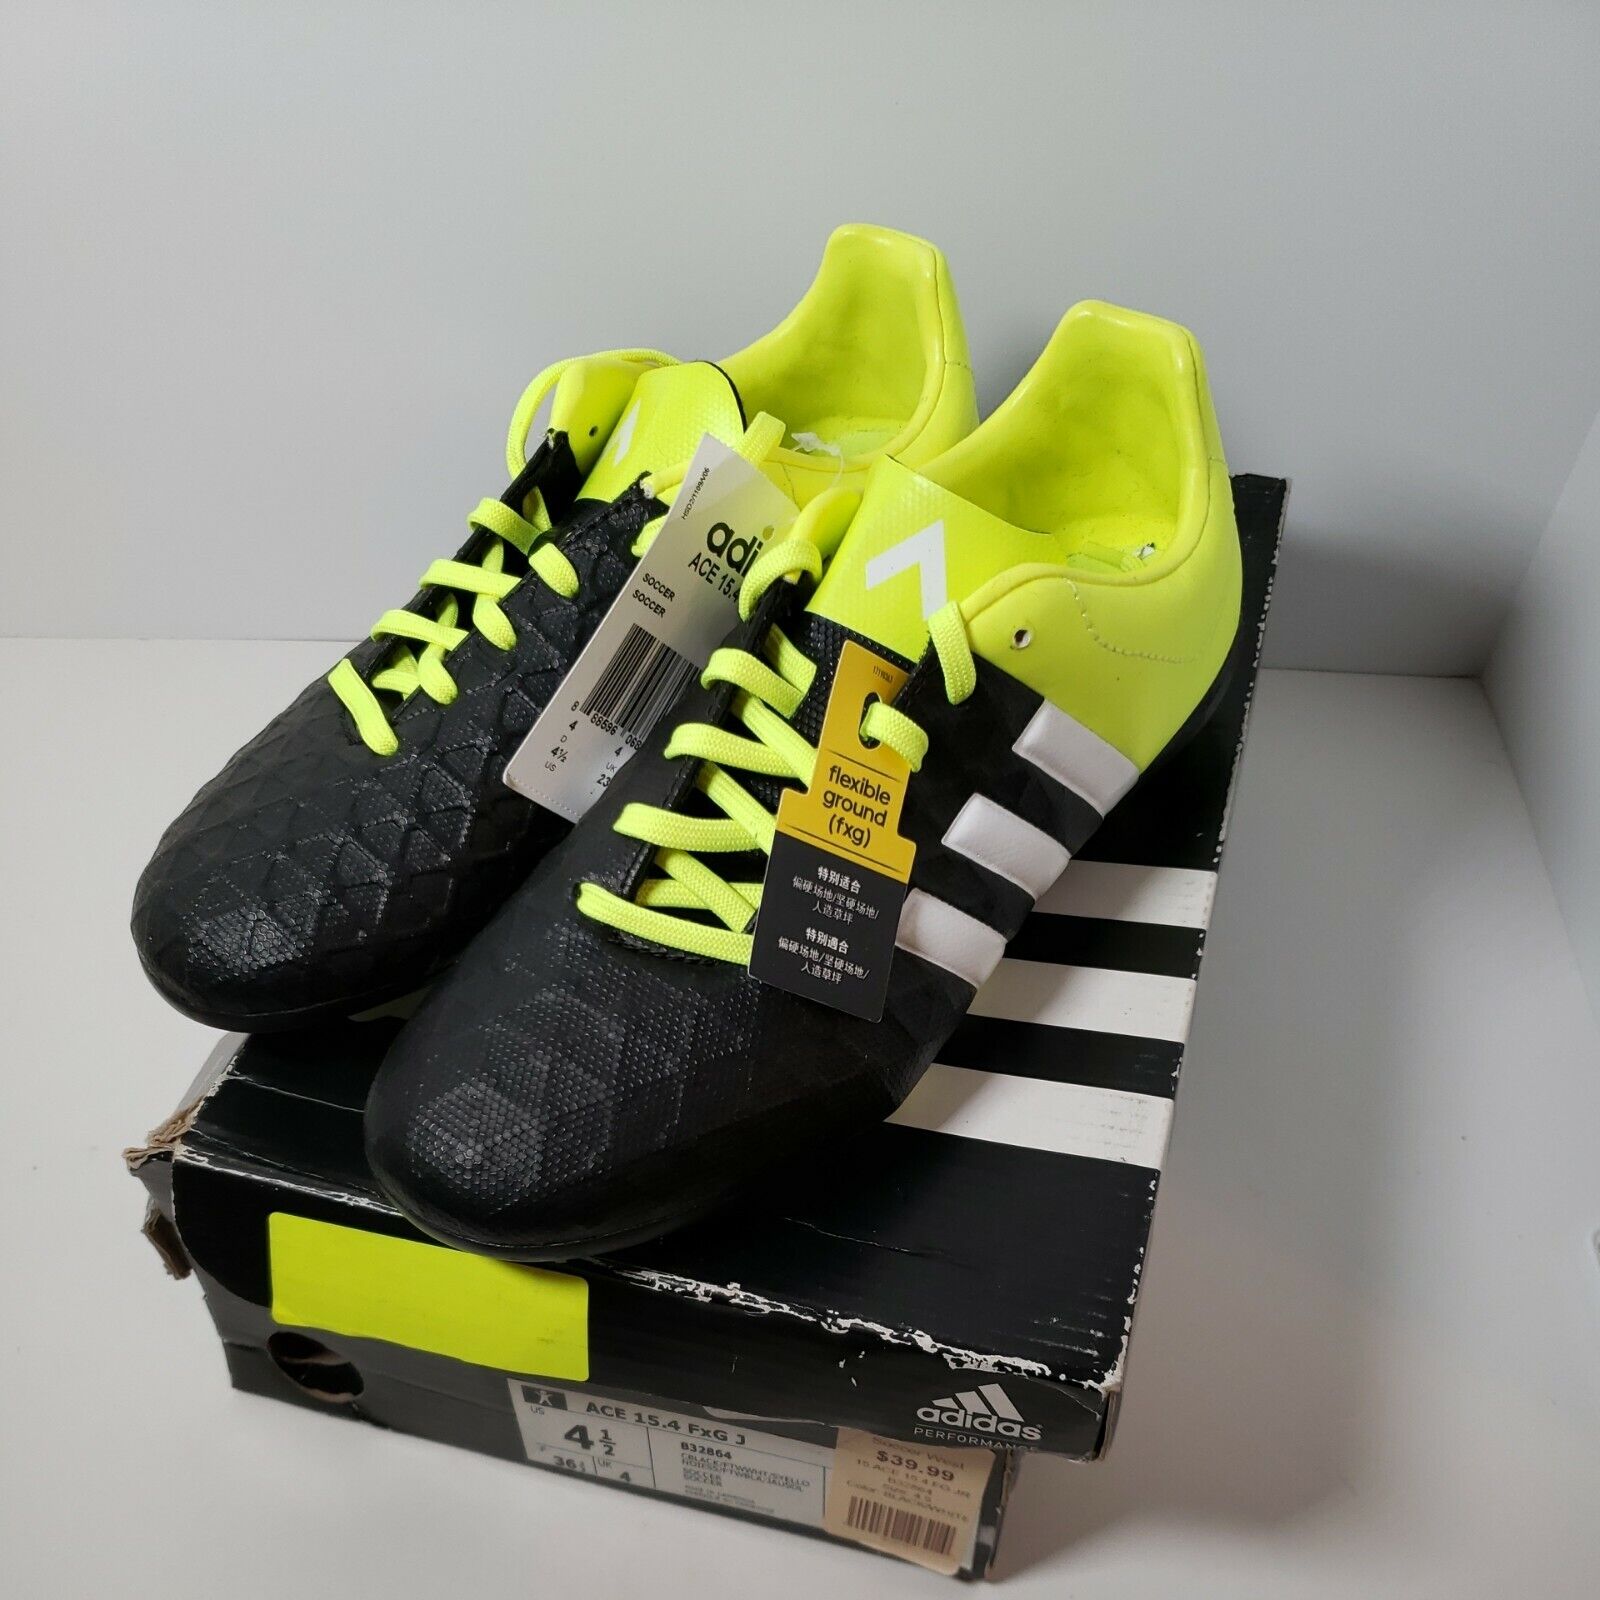 Wardian case mark hard working Adidas Ace 15.4 FxG J Boys Black &amp; Neon Green Soccer Shoe Size 4.5  Brand New | eBay